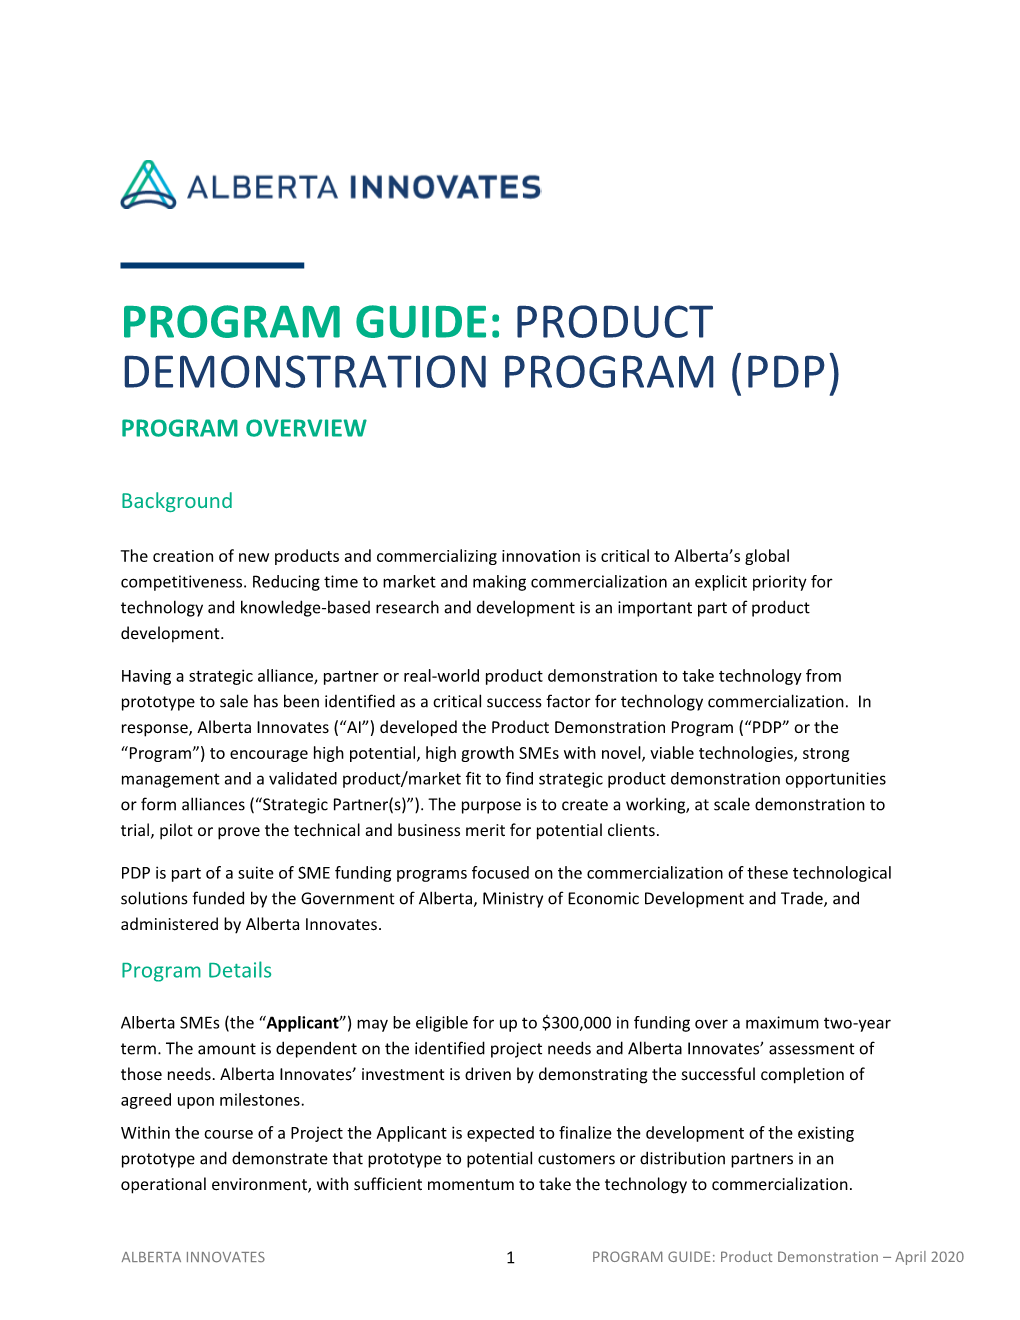 Product Demonstration Program (Pdp) Program Overview